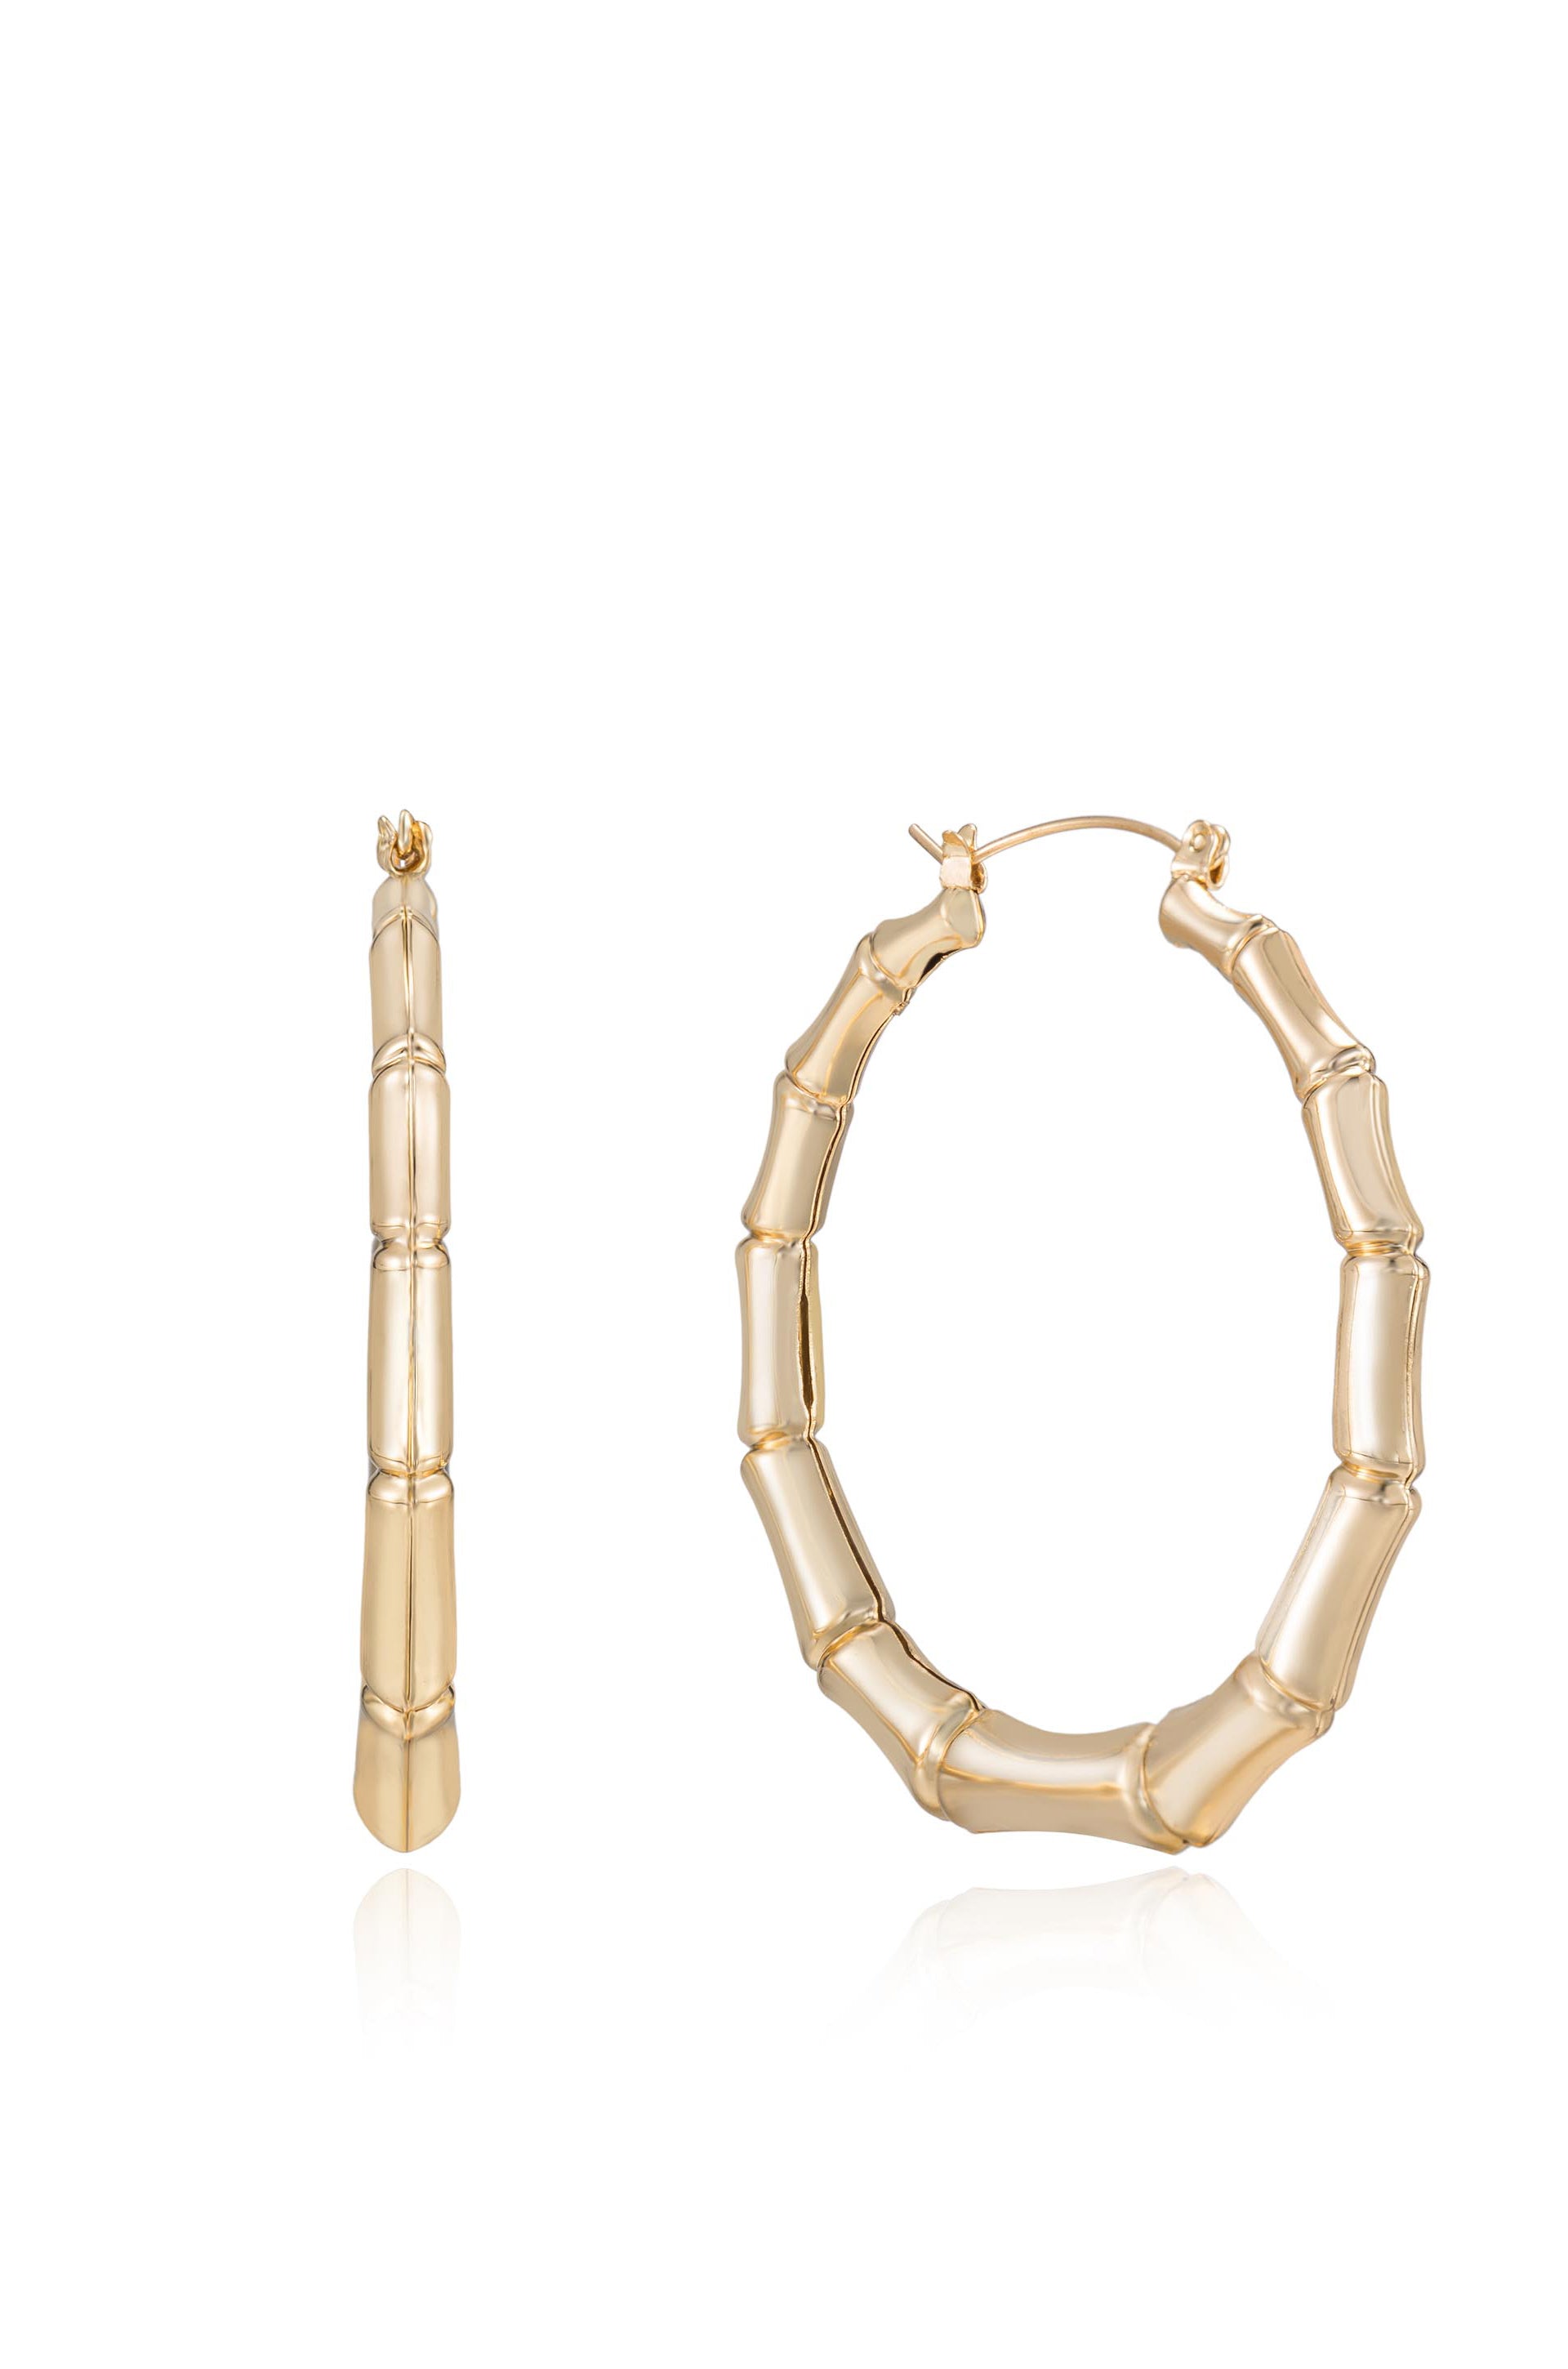 Large Bamboo Hoop Earrings Gold Tone Full 3 inch Hoops 